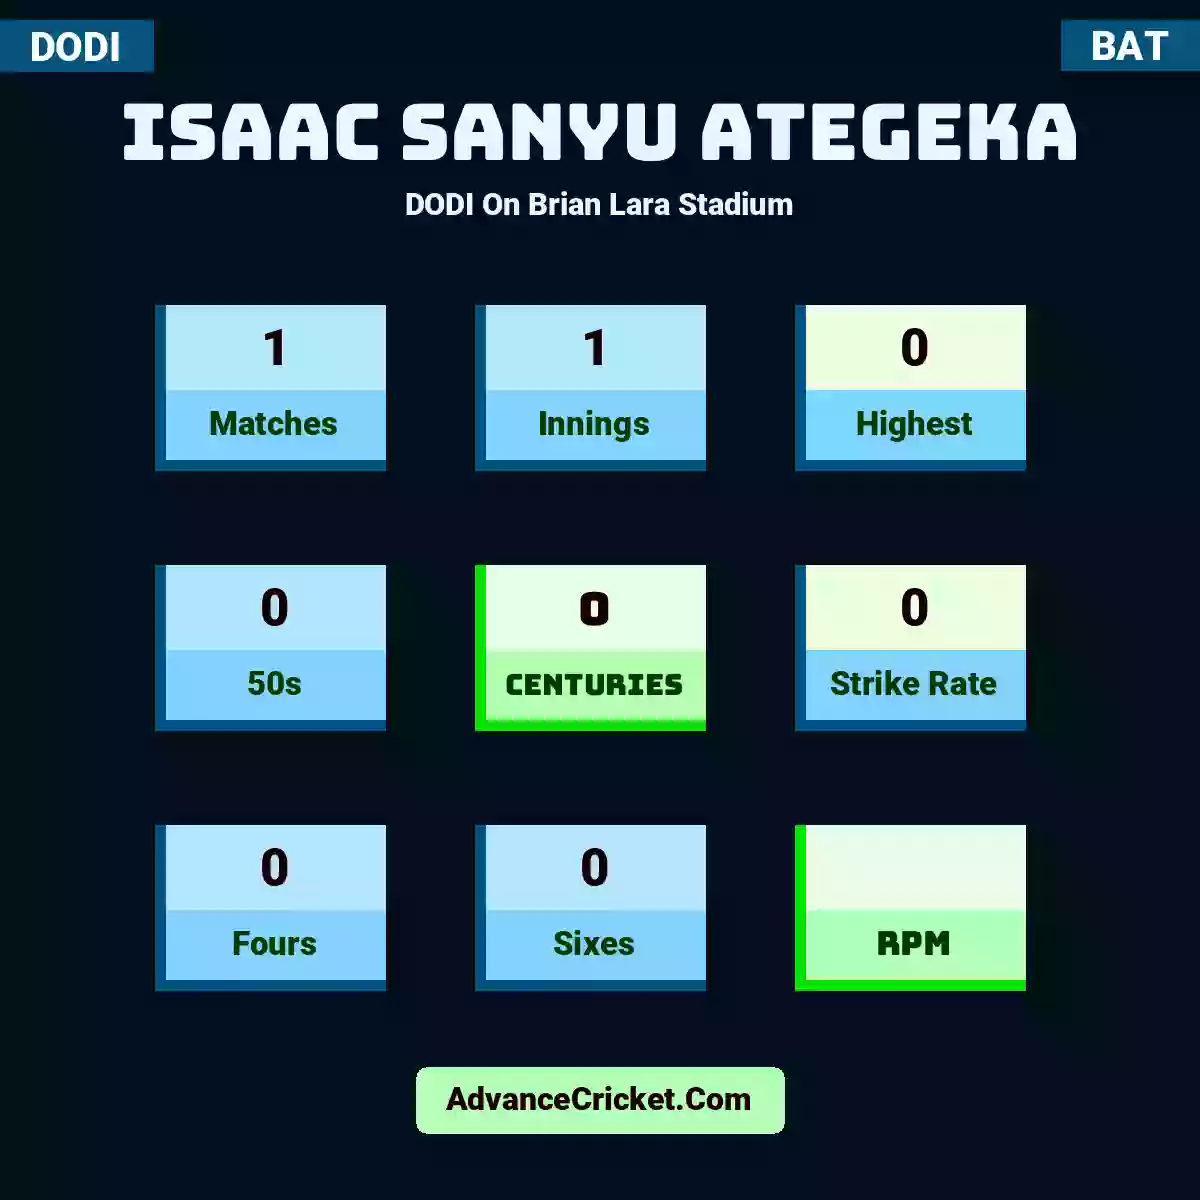 Isaac Sanyu Ategeka DODI  On Brian Lara Stadium, Isaac Sanyu Ategeka played 1 matches, scored 0 runs as highest, 0 half-centuries, and 0 centuries, with a strike rate of 0. I.Ategeka hit 0 fours and 0 sixes.